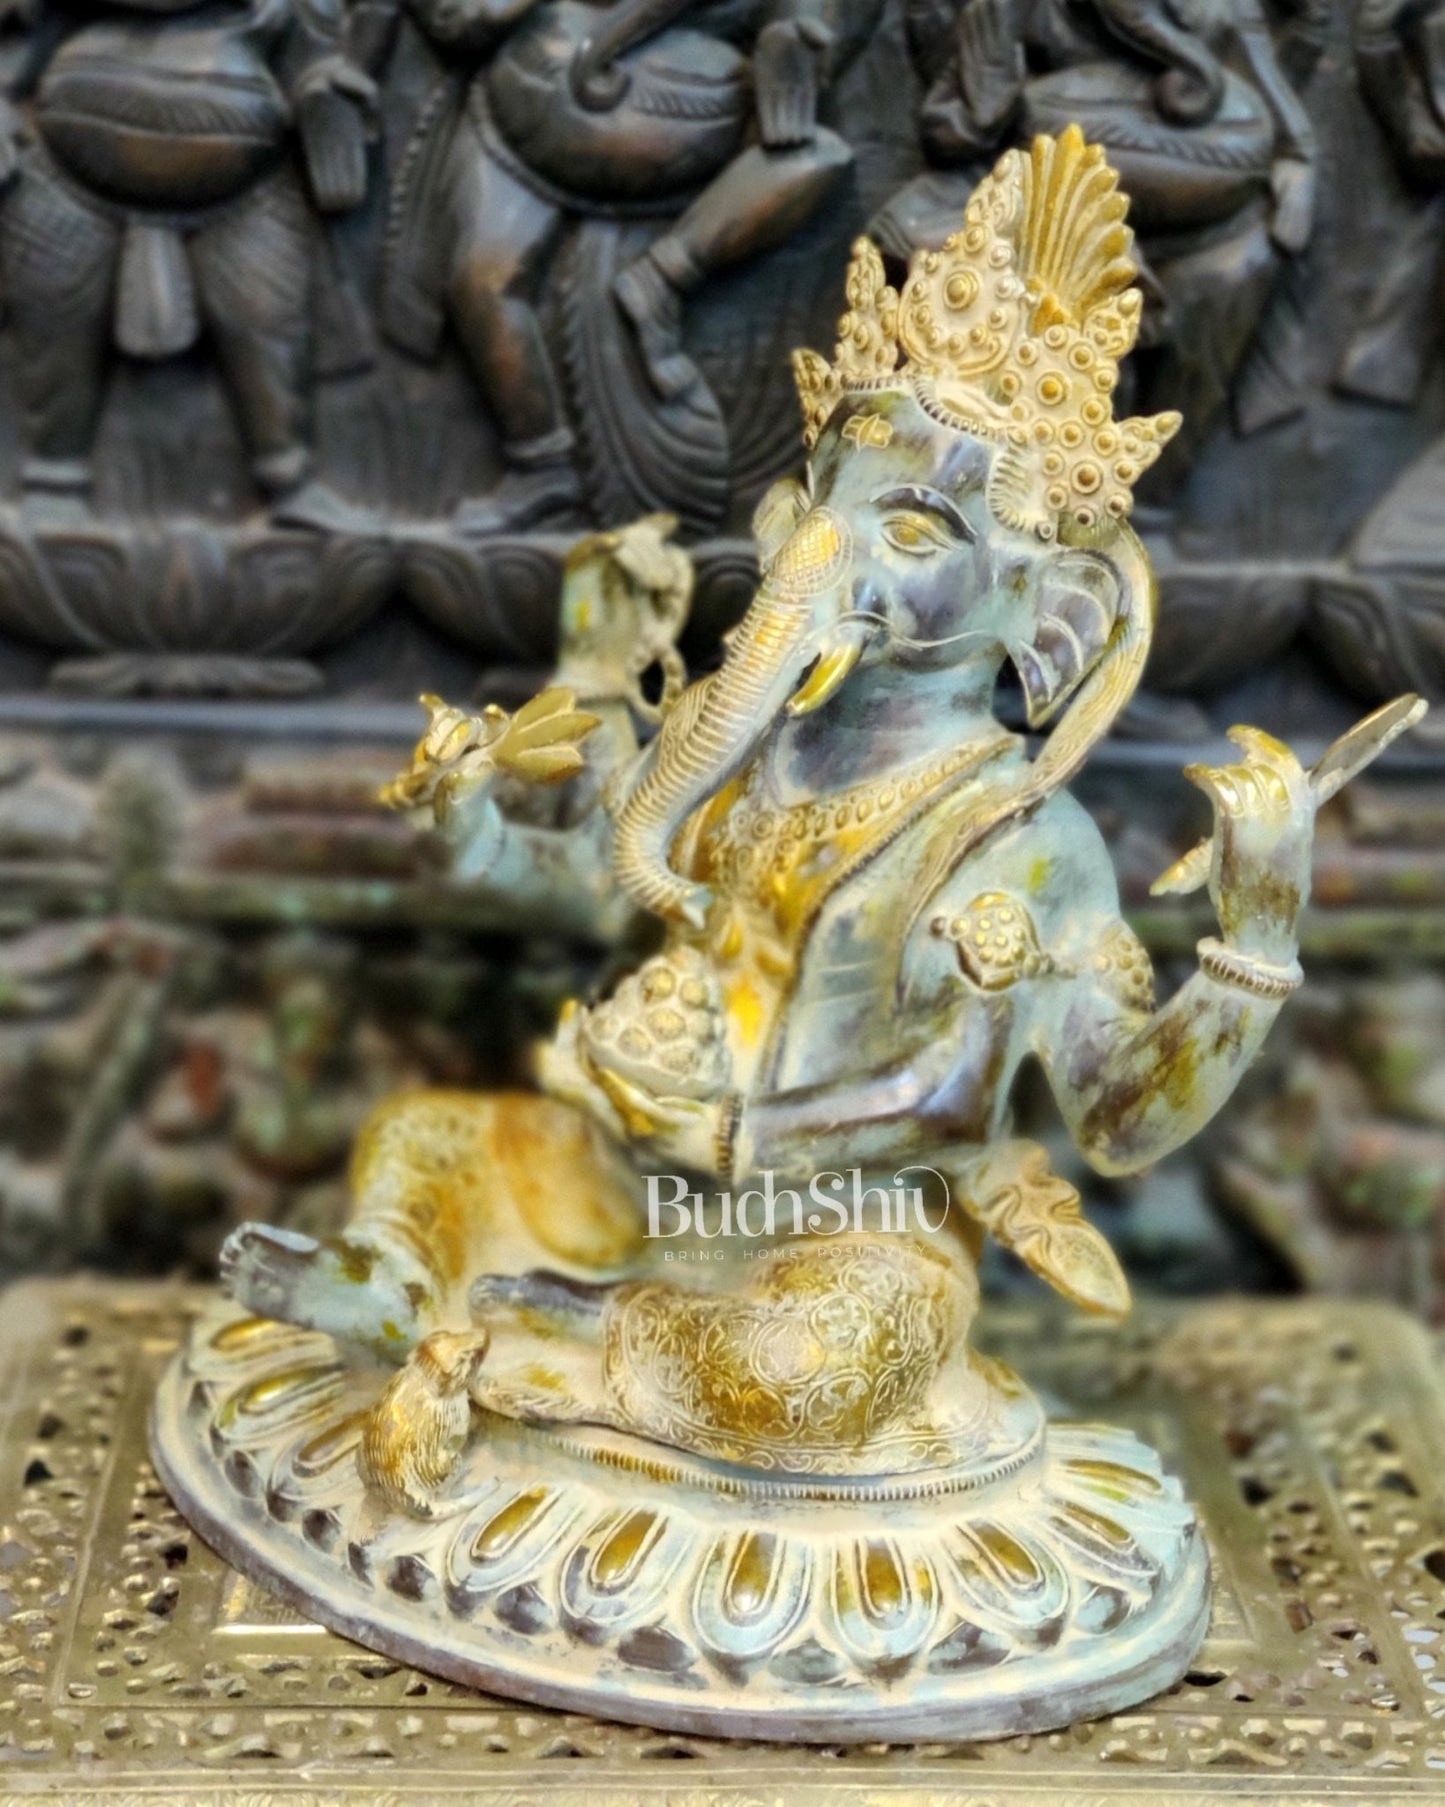 Brass Nepalese Style Ganesha seated on a round base. - Budhshiv.com